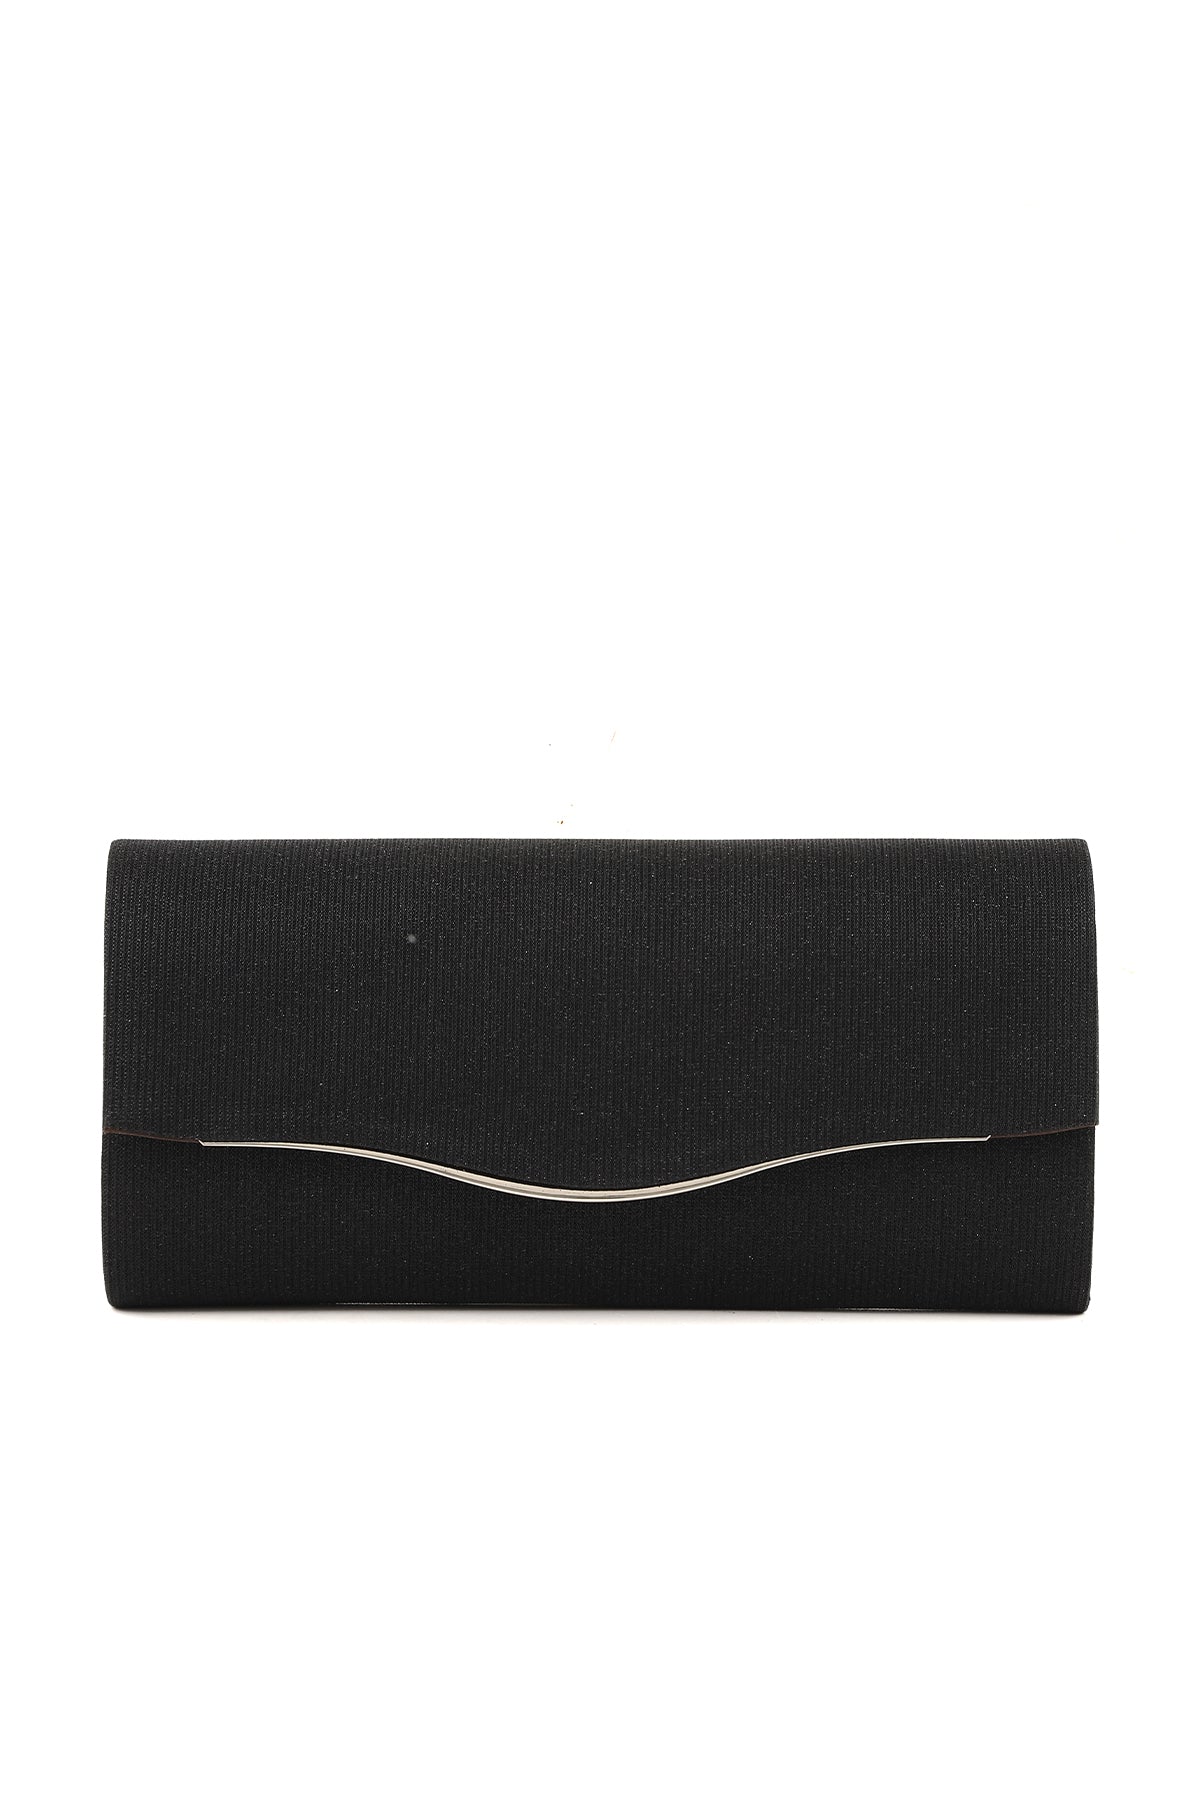 Flap Shoulder Bags B21586-Black